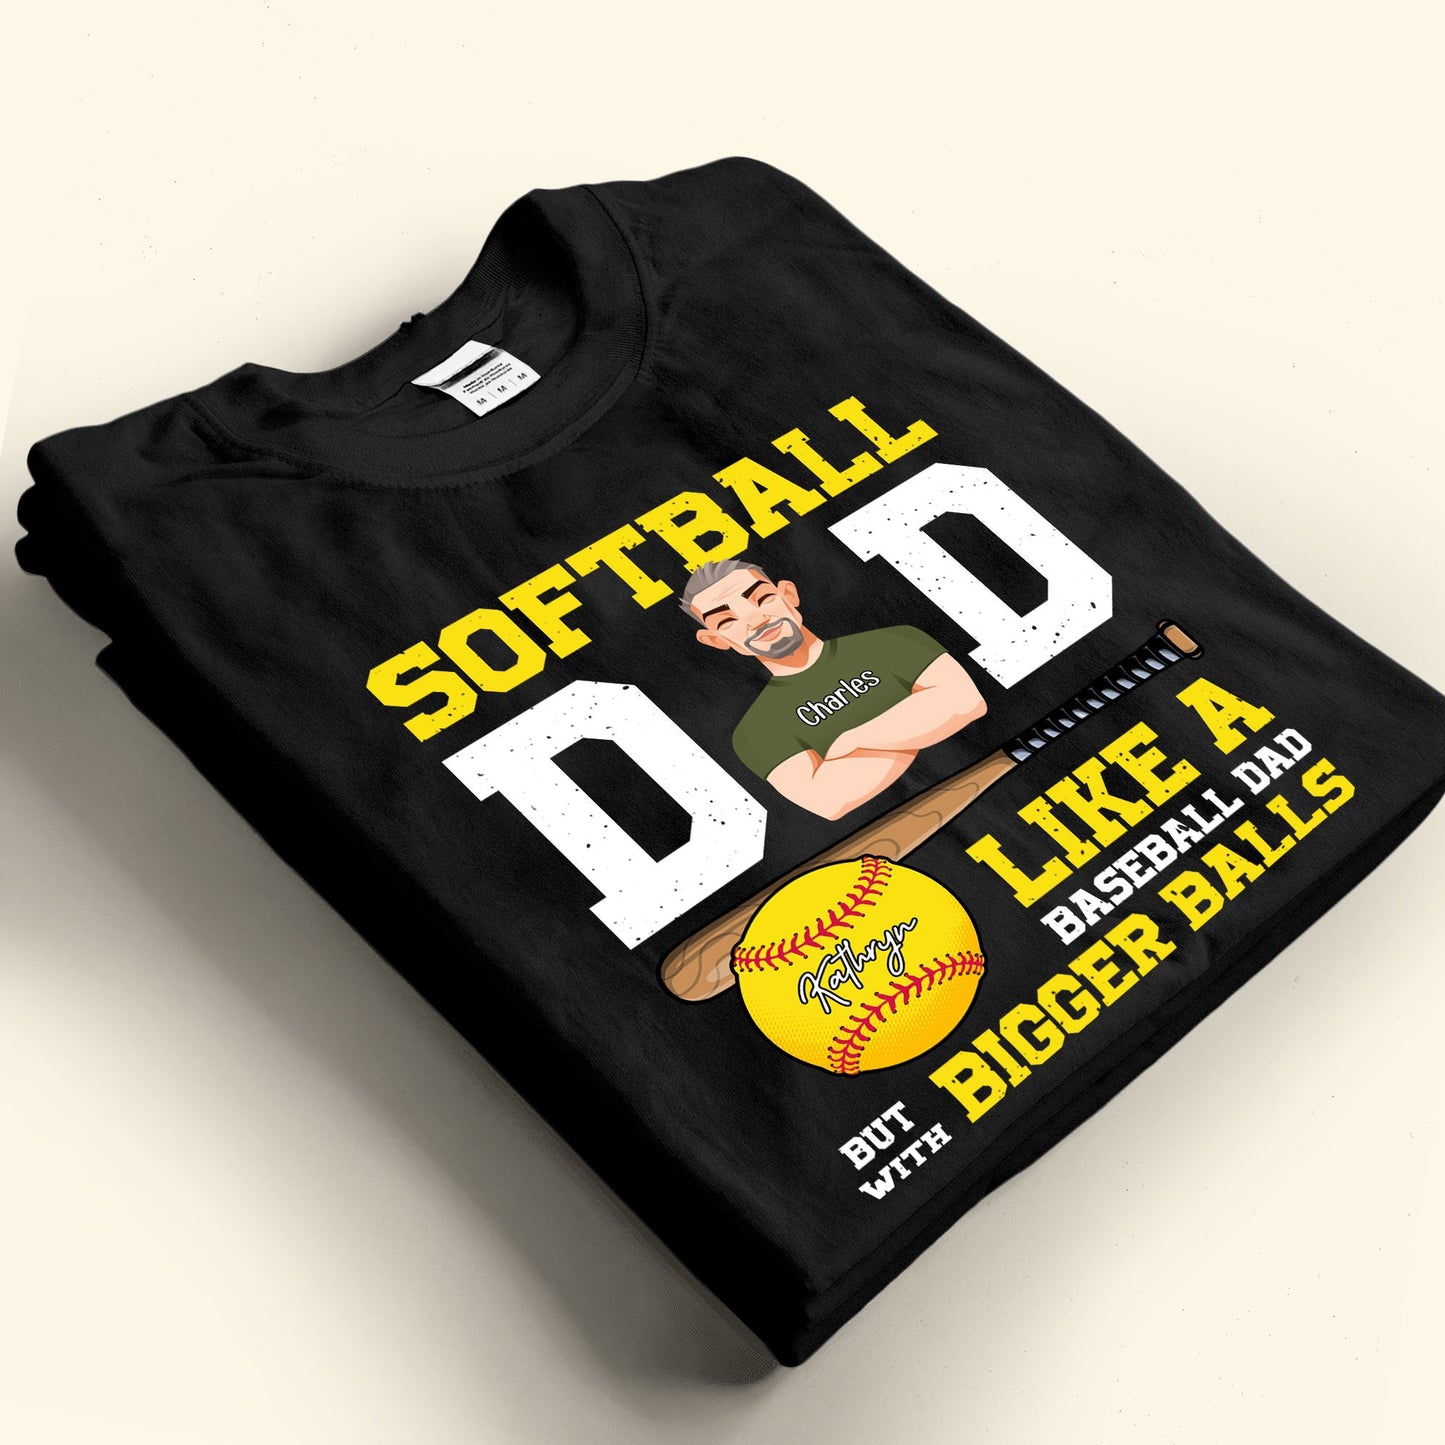 Softball Dad - Personalized Shirt